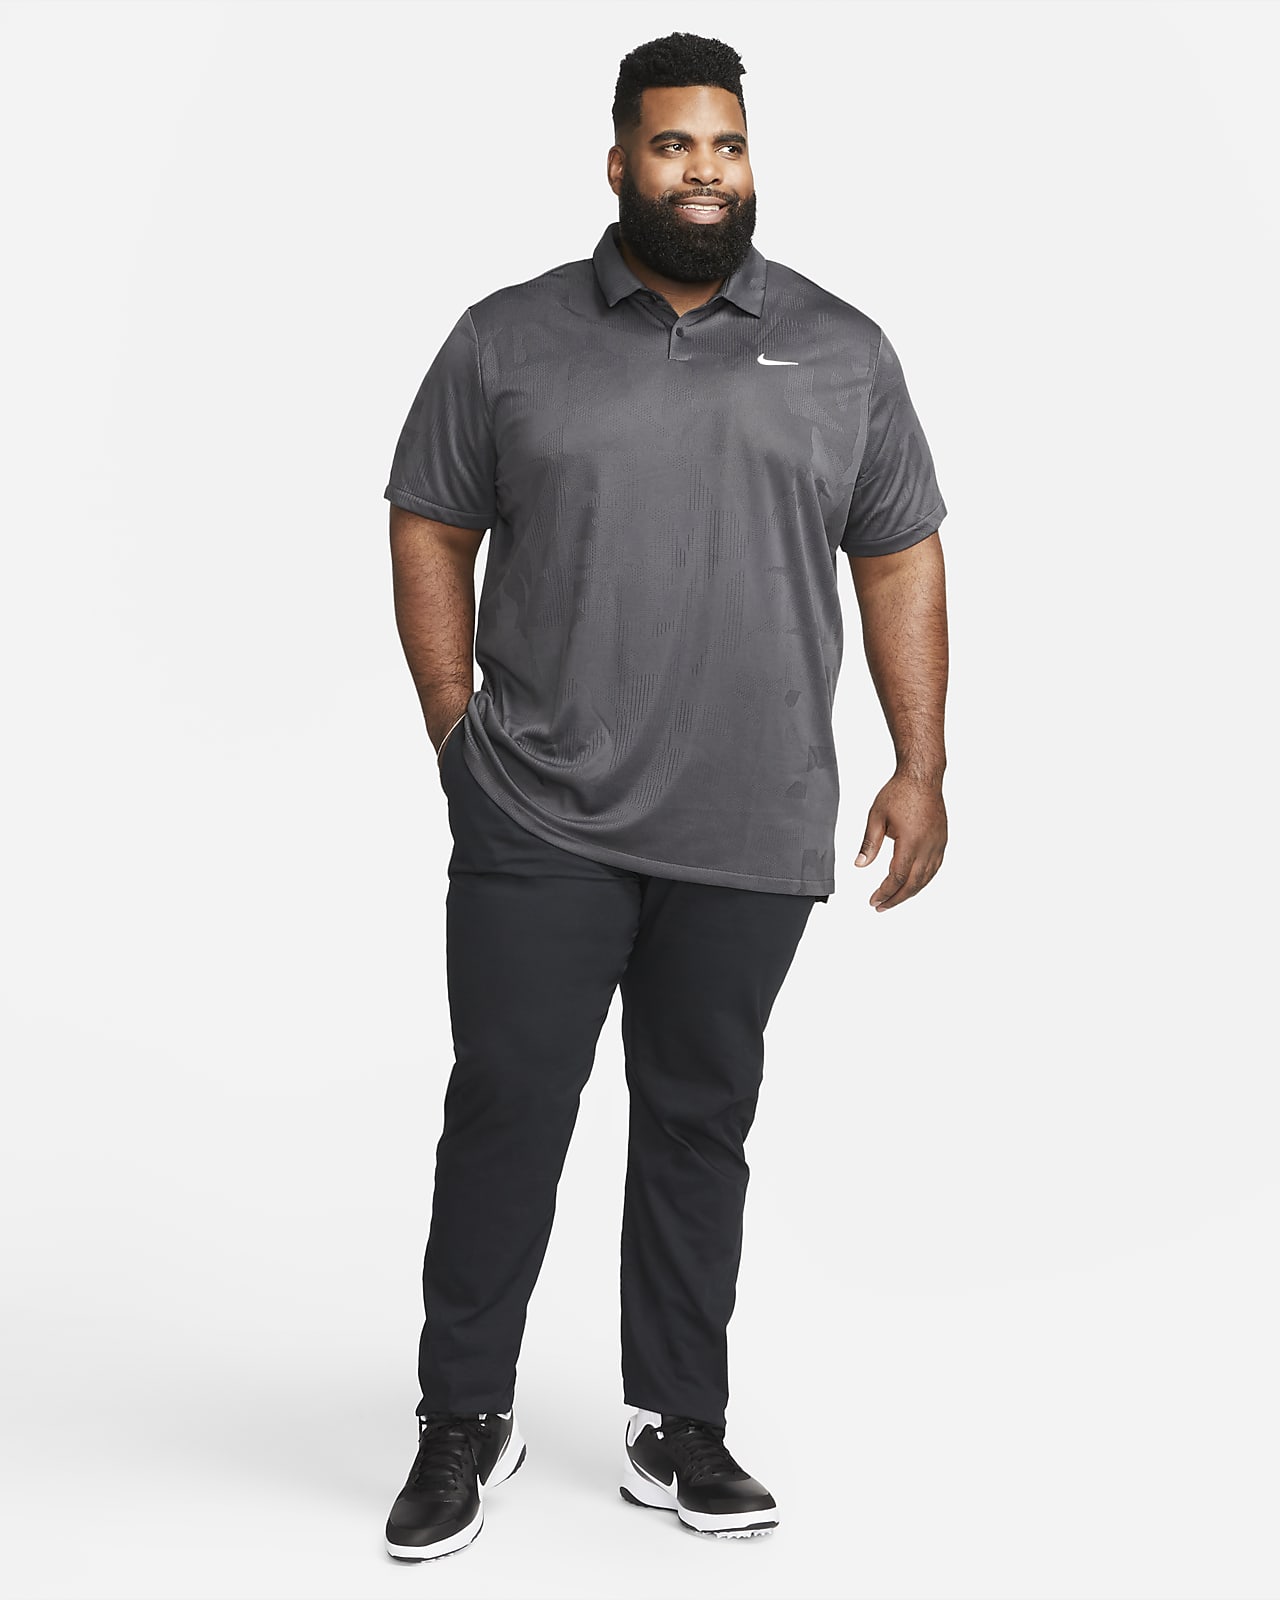 Men's Nike Big & Tall Pants & Chinos